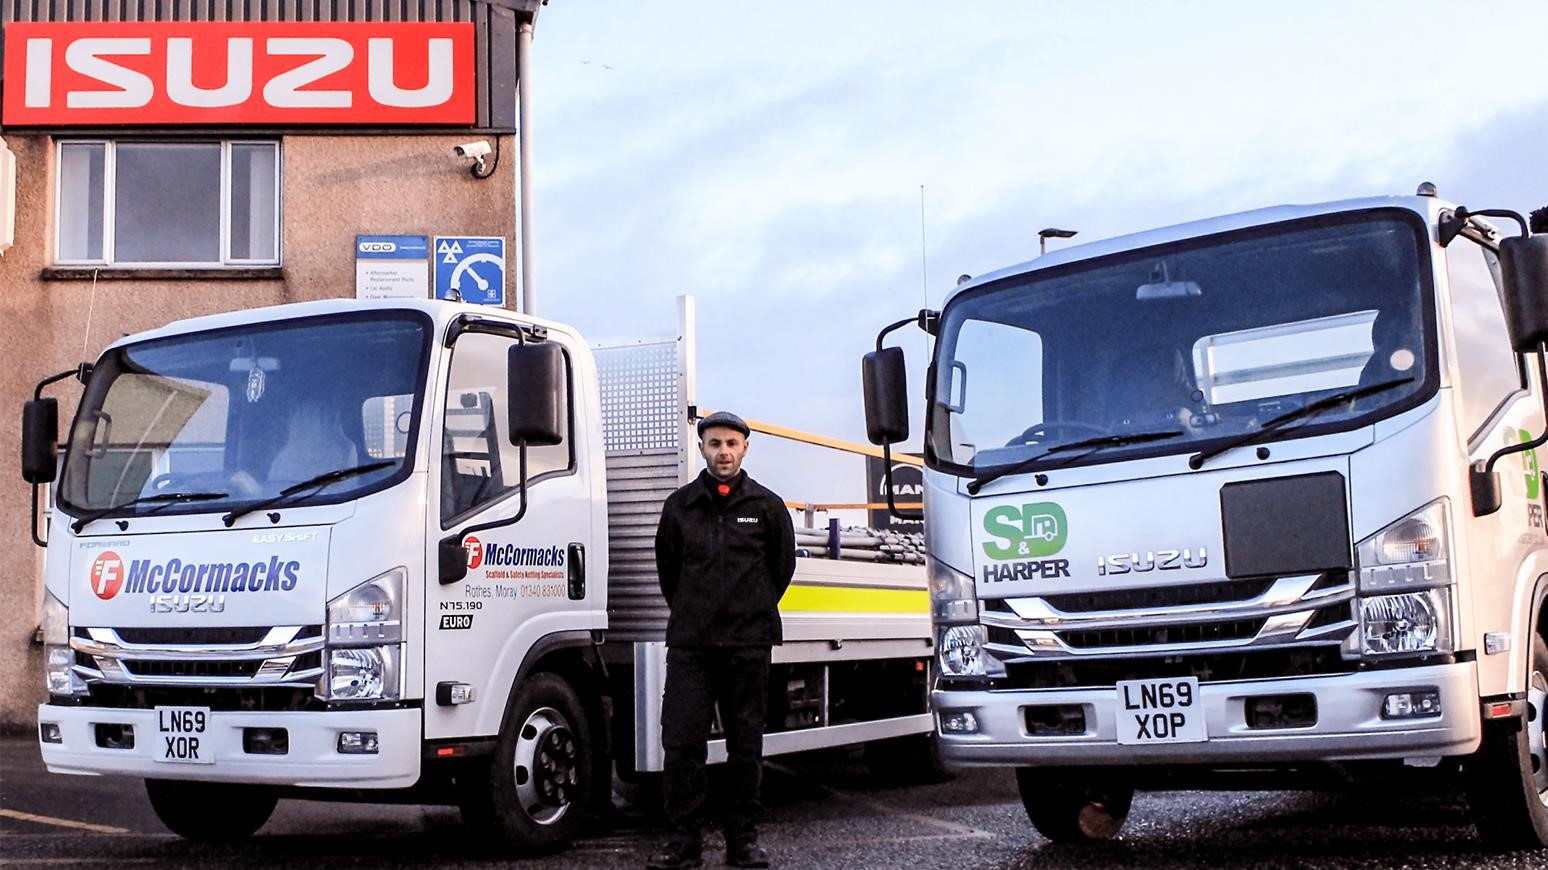 Isuzu Expands Its Presence In North Of Scotland Thanks To Elgin Truck & Van Centre Ltd